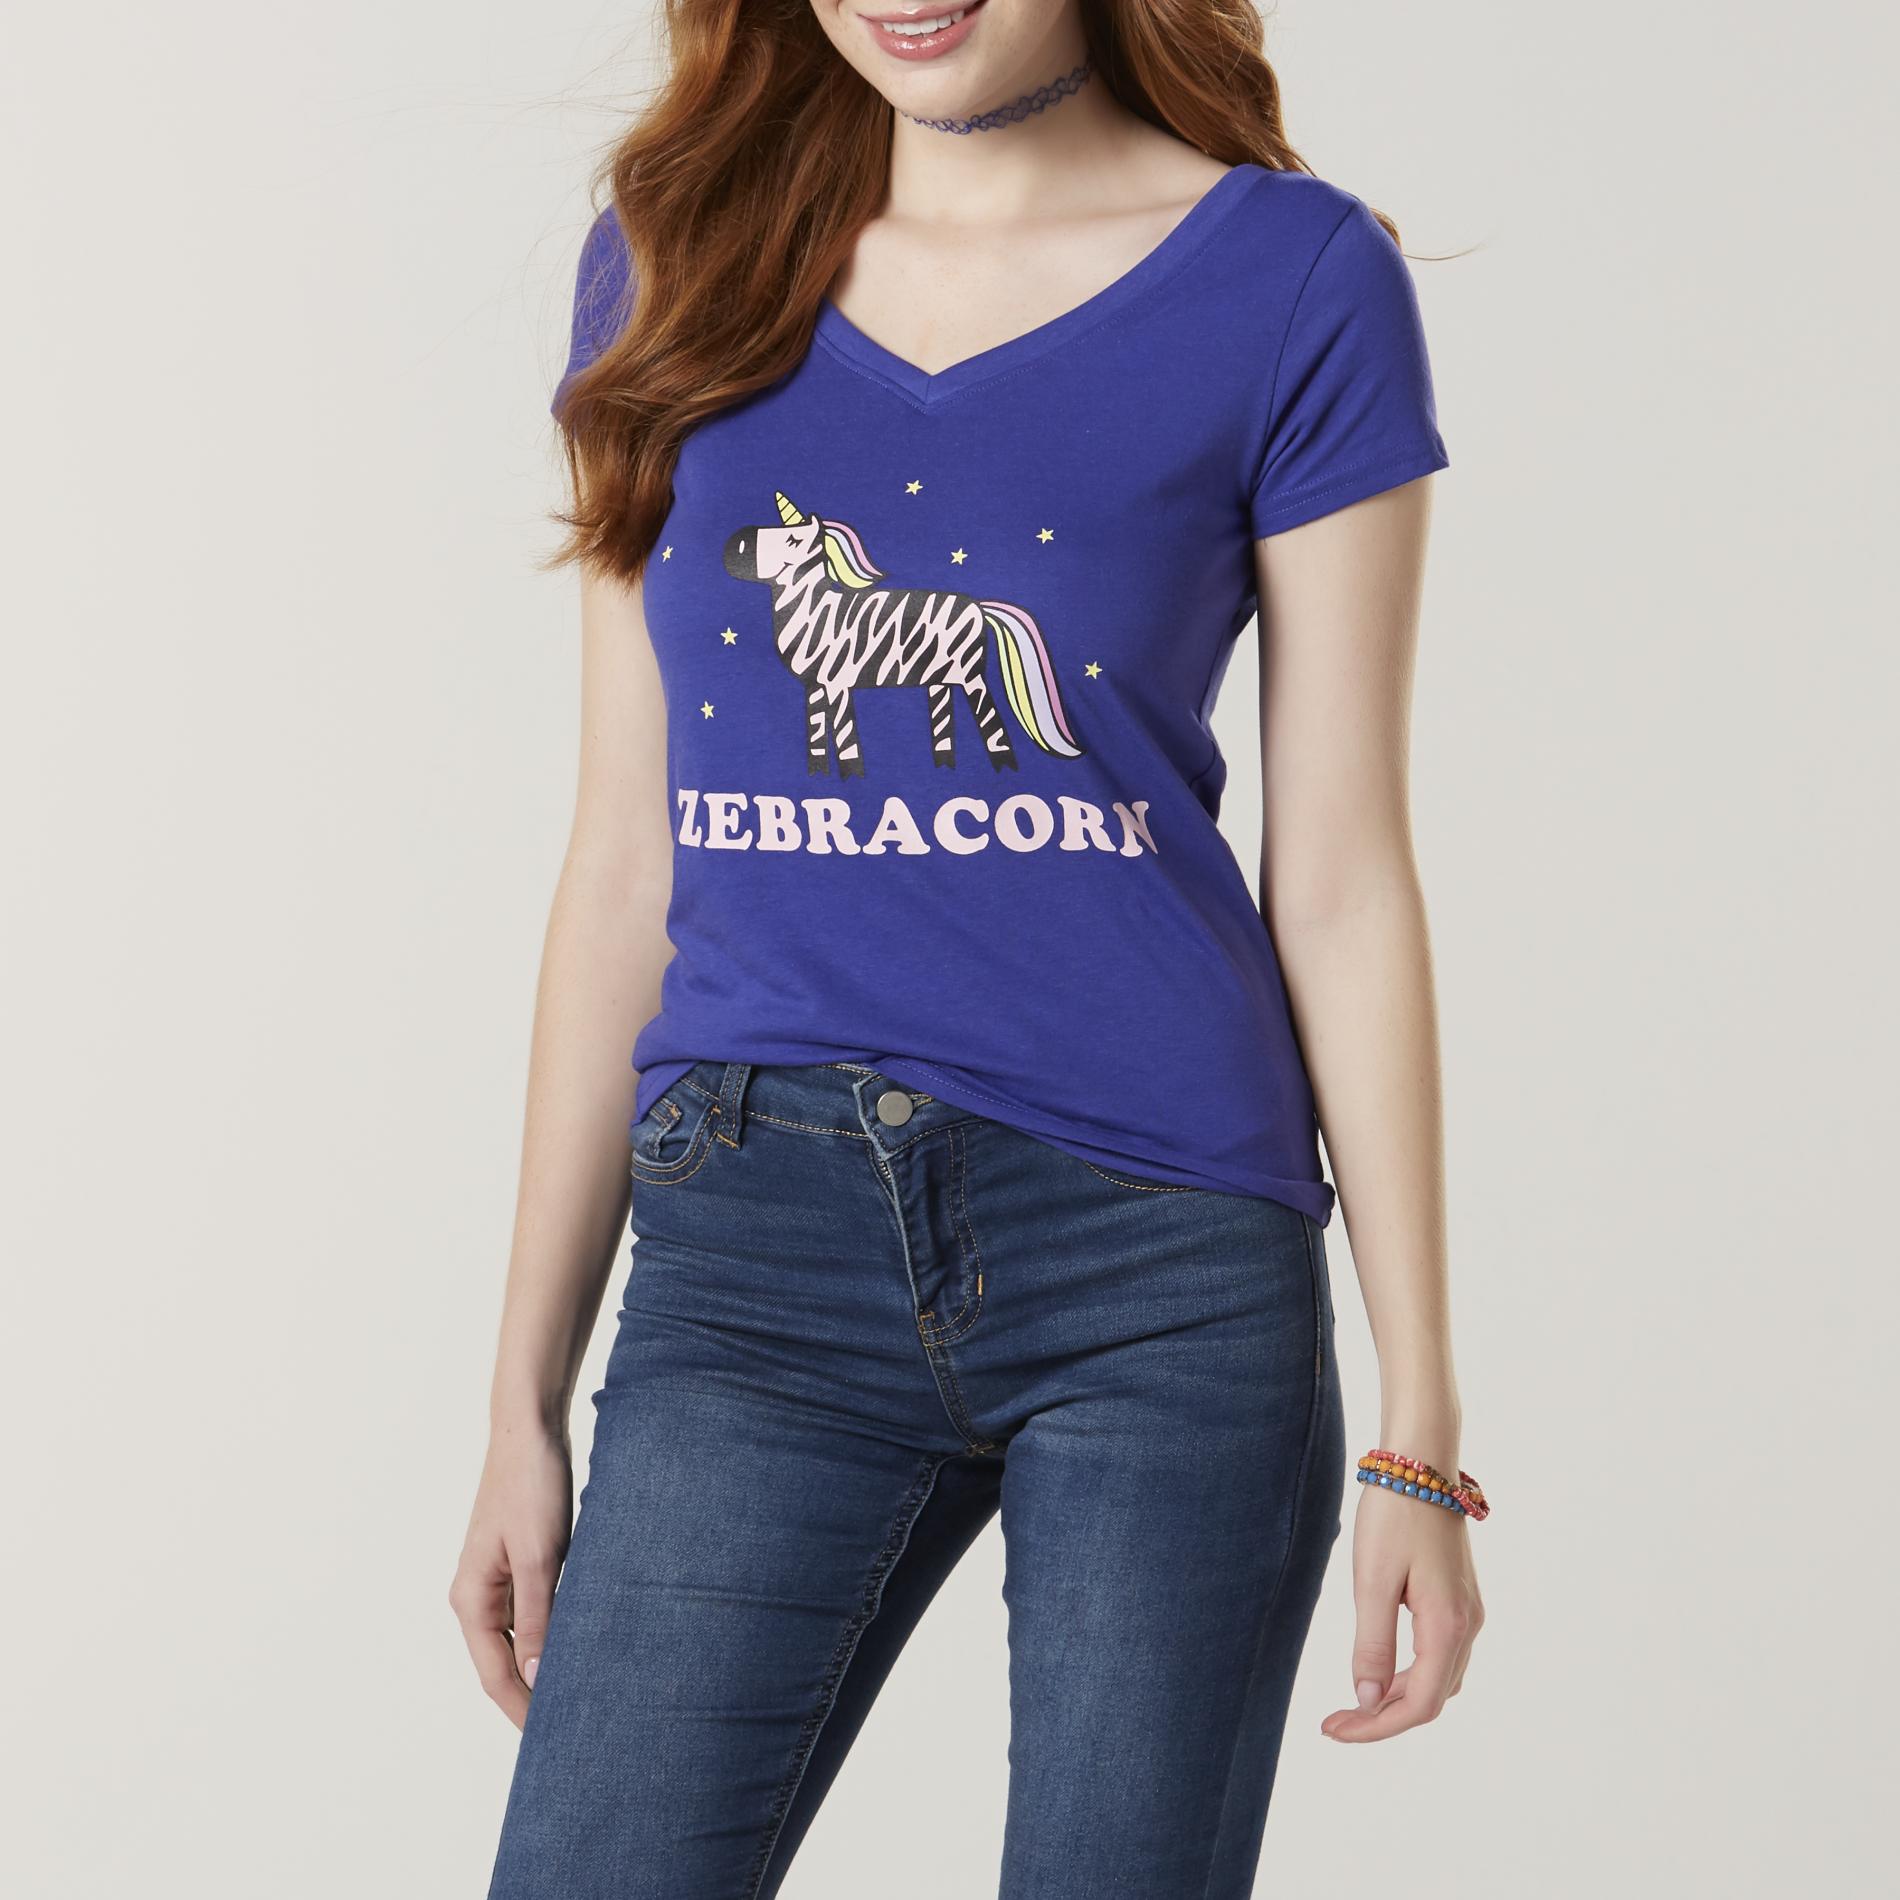 Joe Boxer Juniors' V-Neck Graphic T-Shirt - Zebracorn